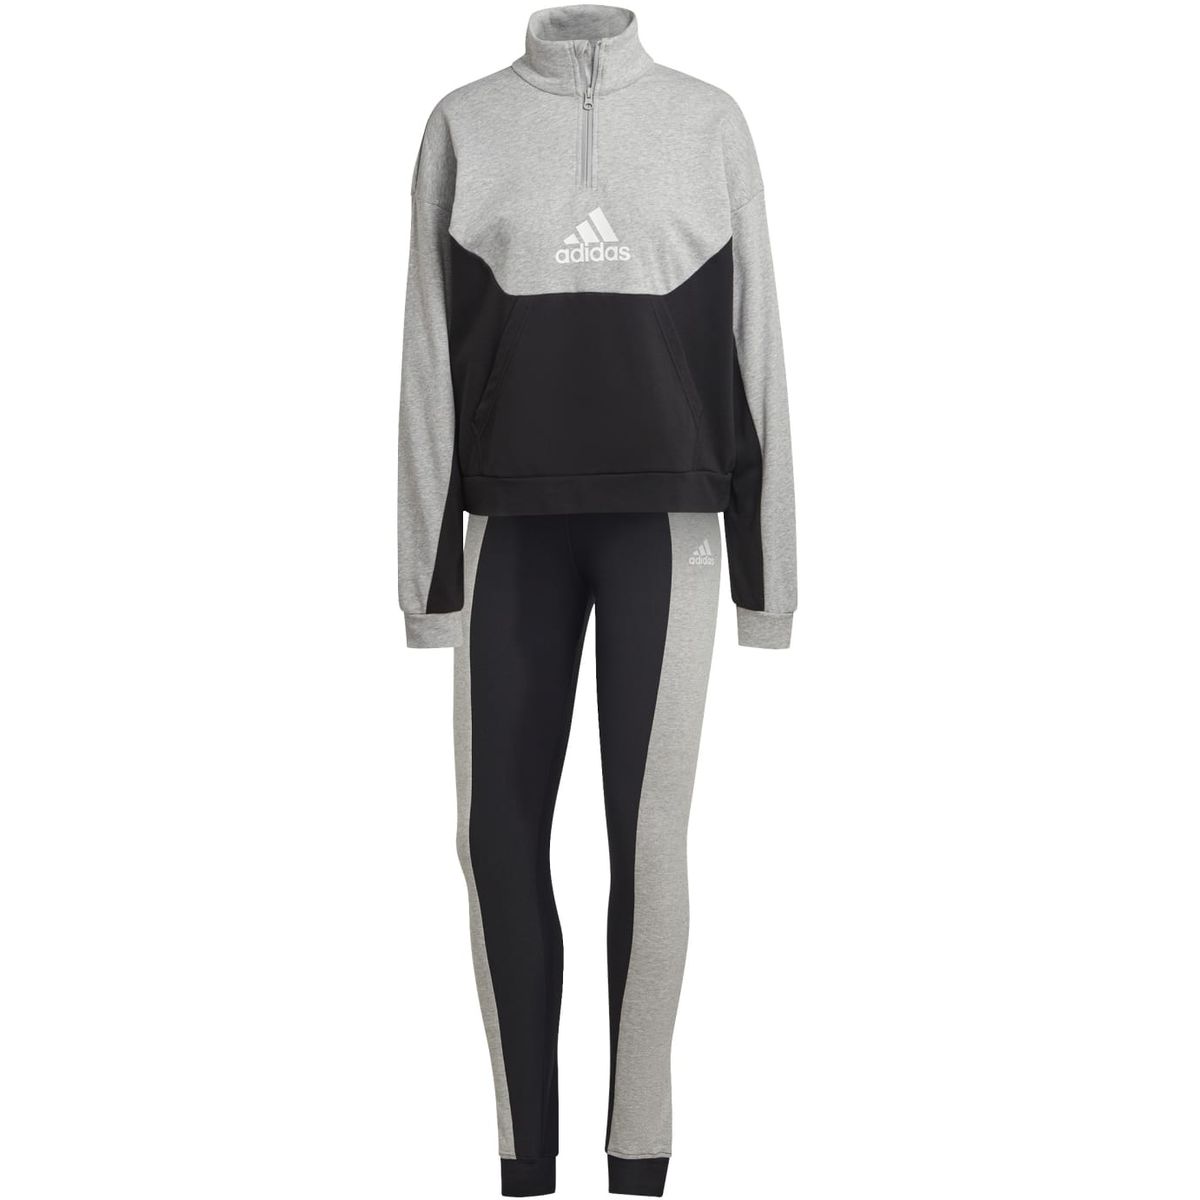 Adidas Half-Zip and Tights Trainingsanzug Damen